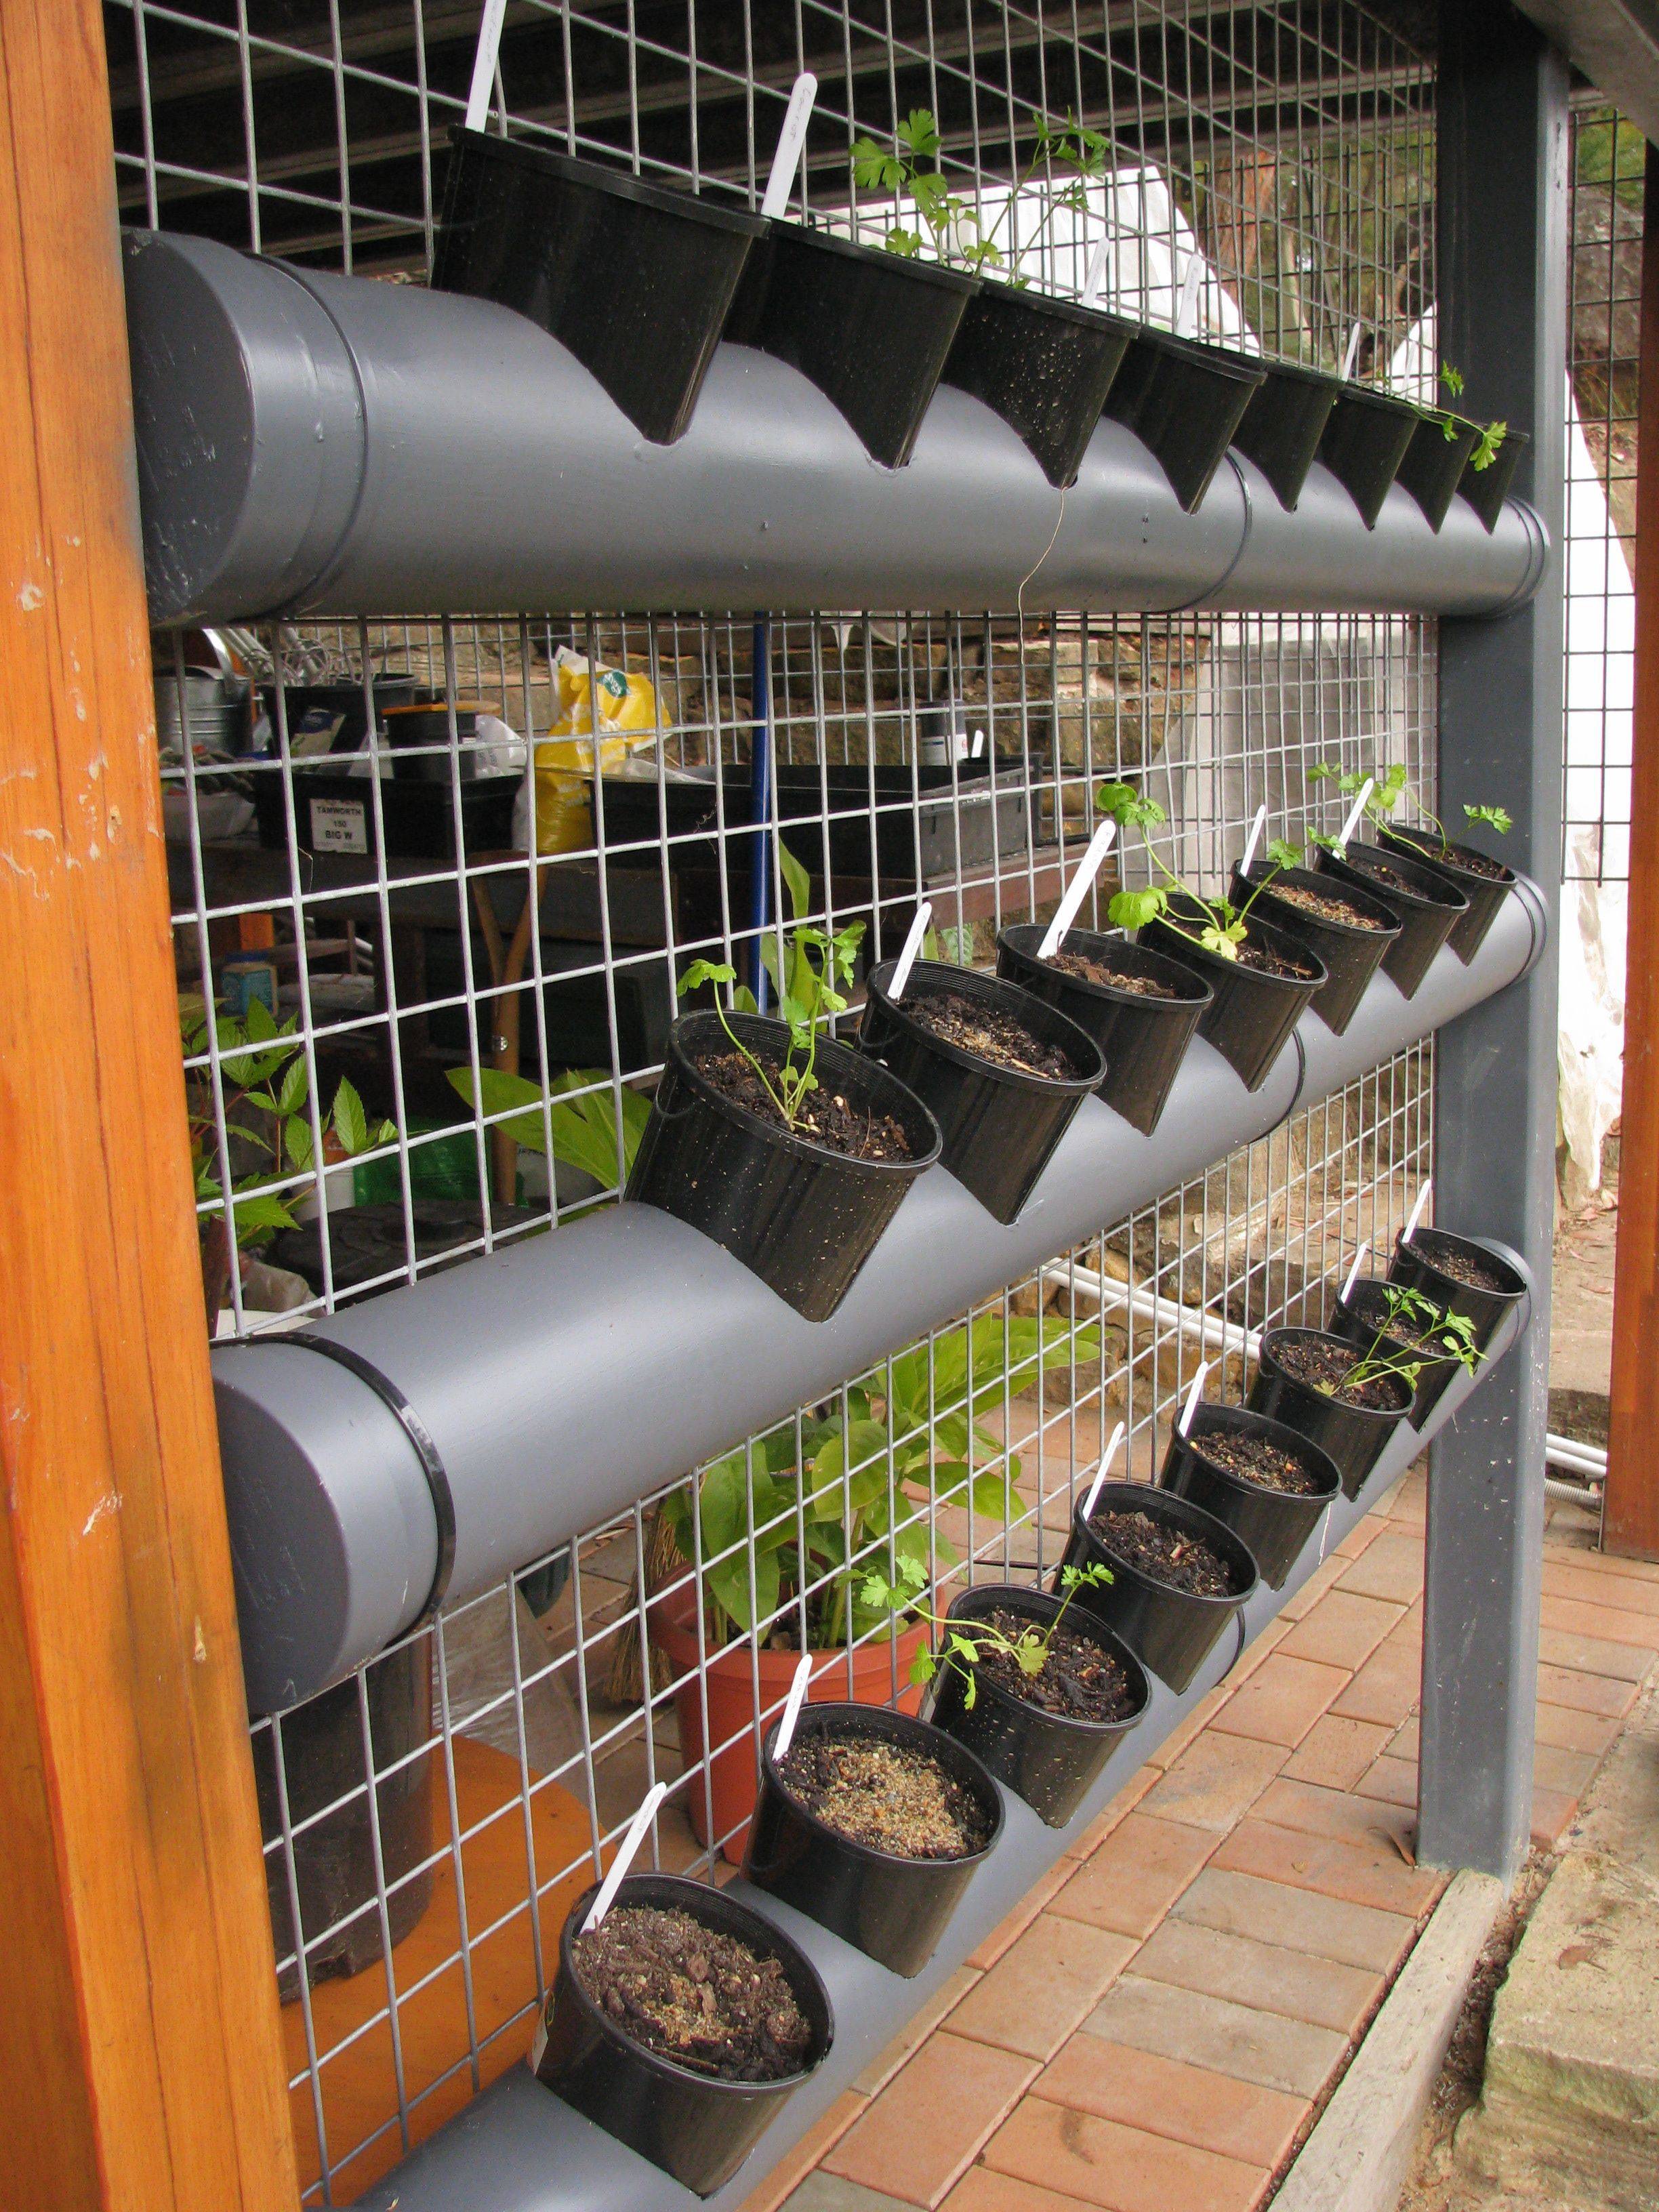 Nutritower Vertical Indoor Hydroponics Garden System